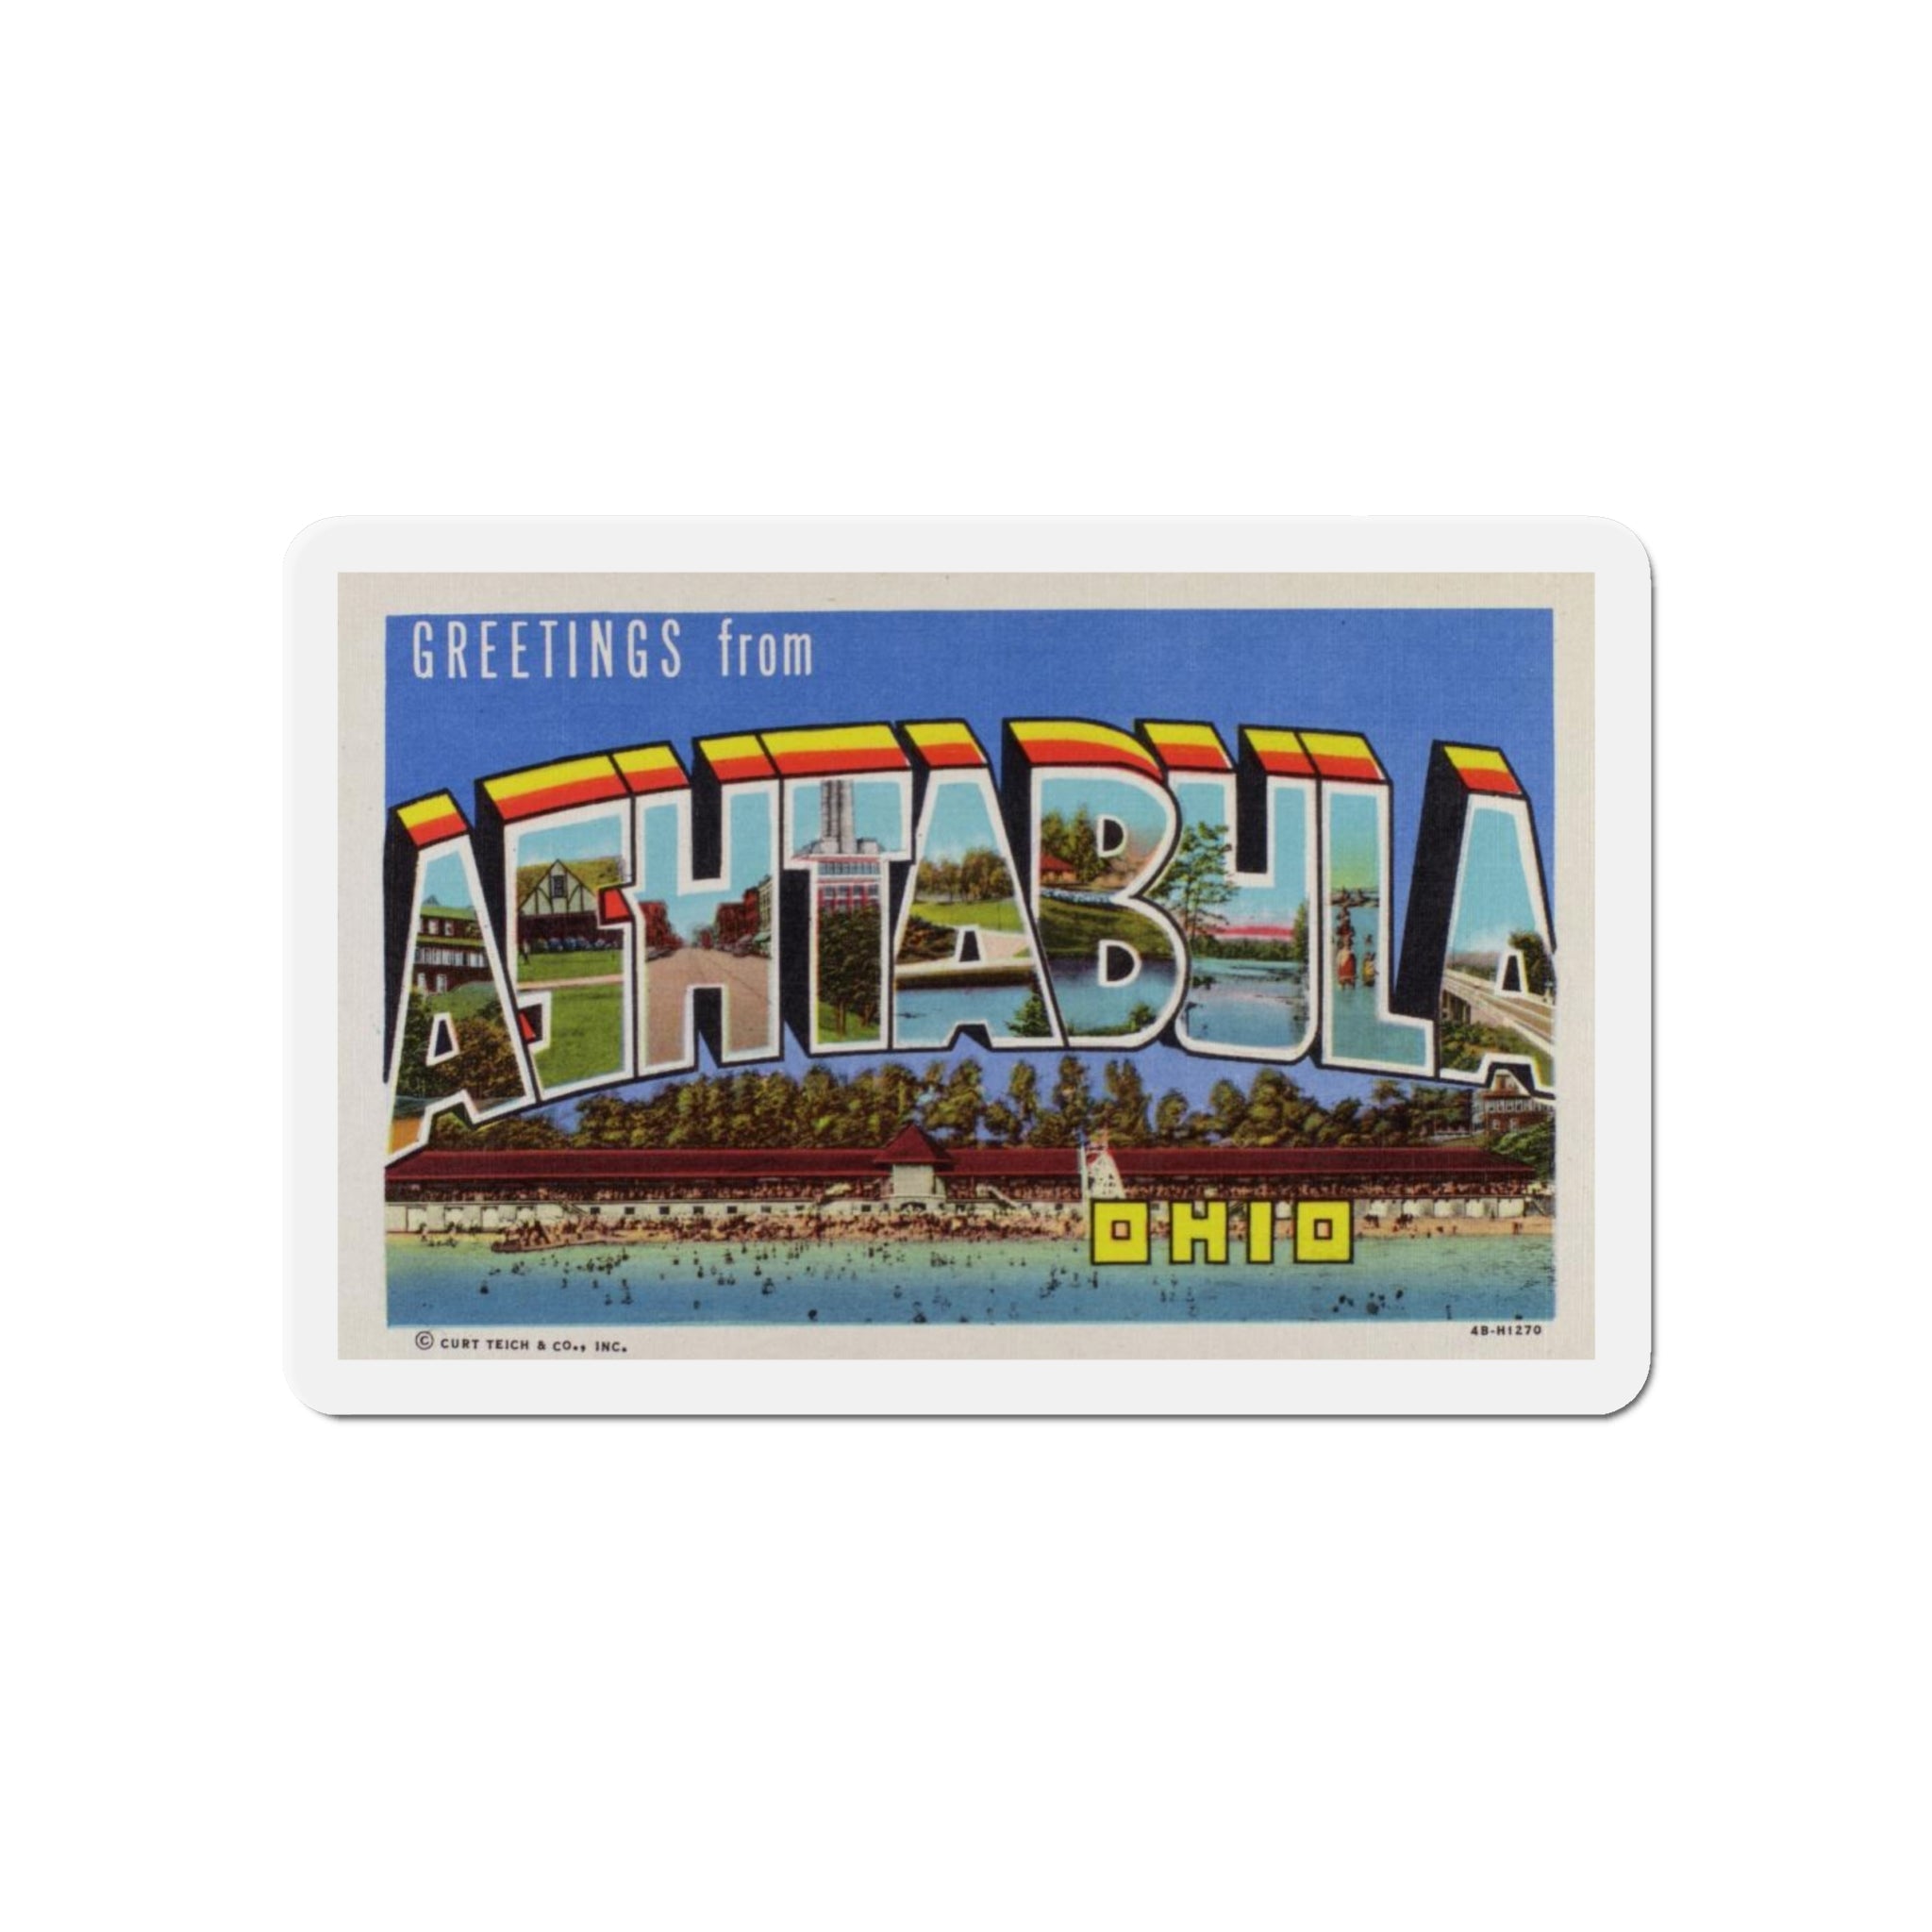 Greetings from Ashtabula Ohio (Greeting Postcards) Die-Cut Magnet